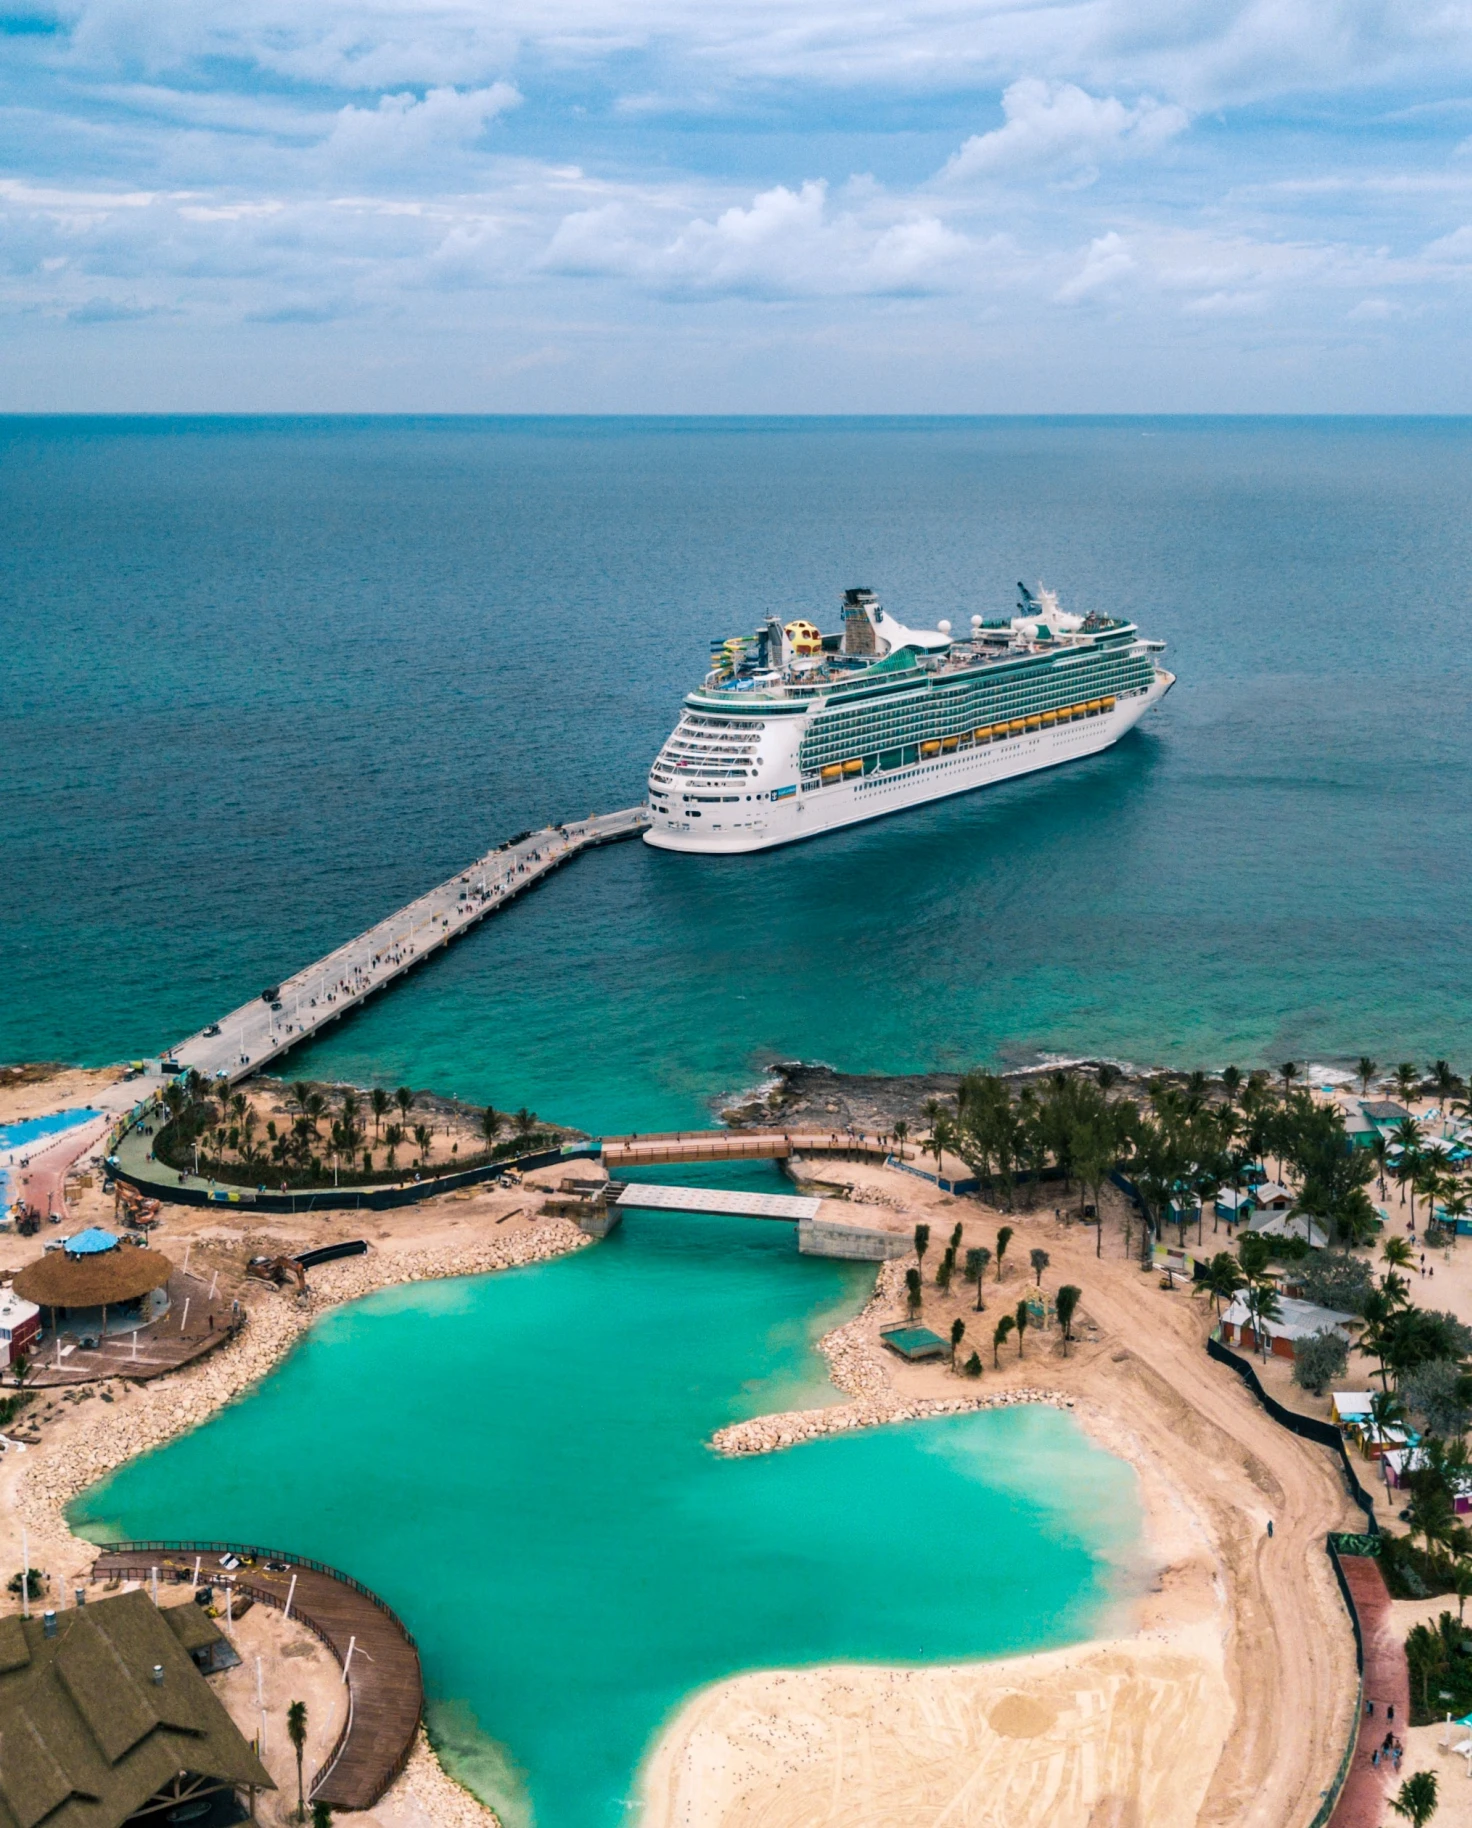 cruise ship in water next to land during daytime